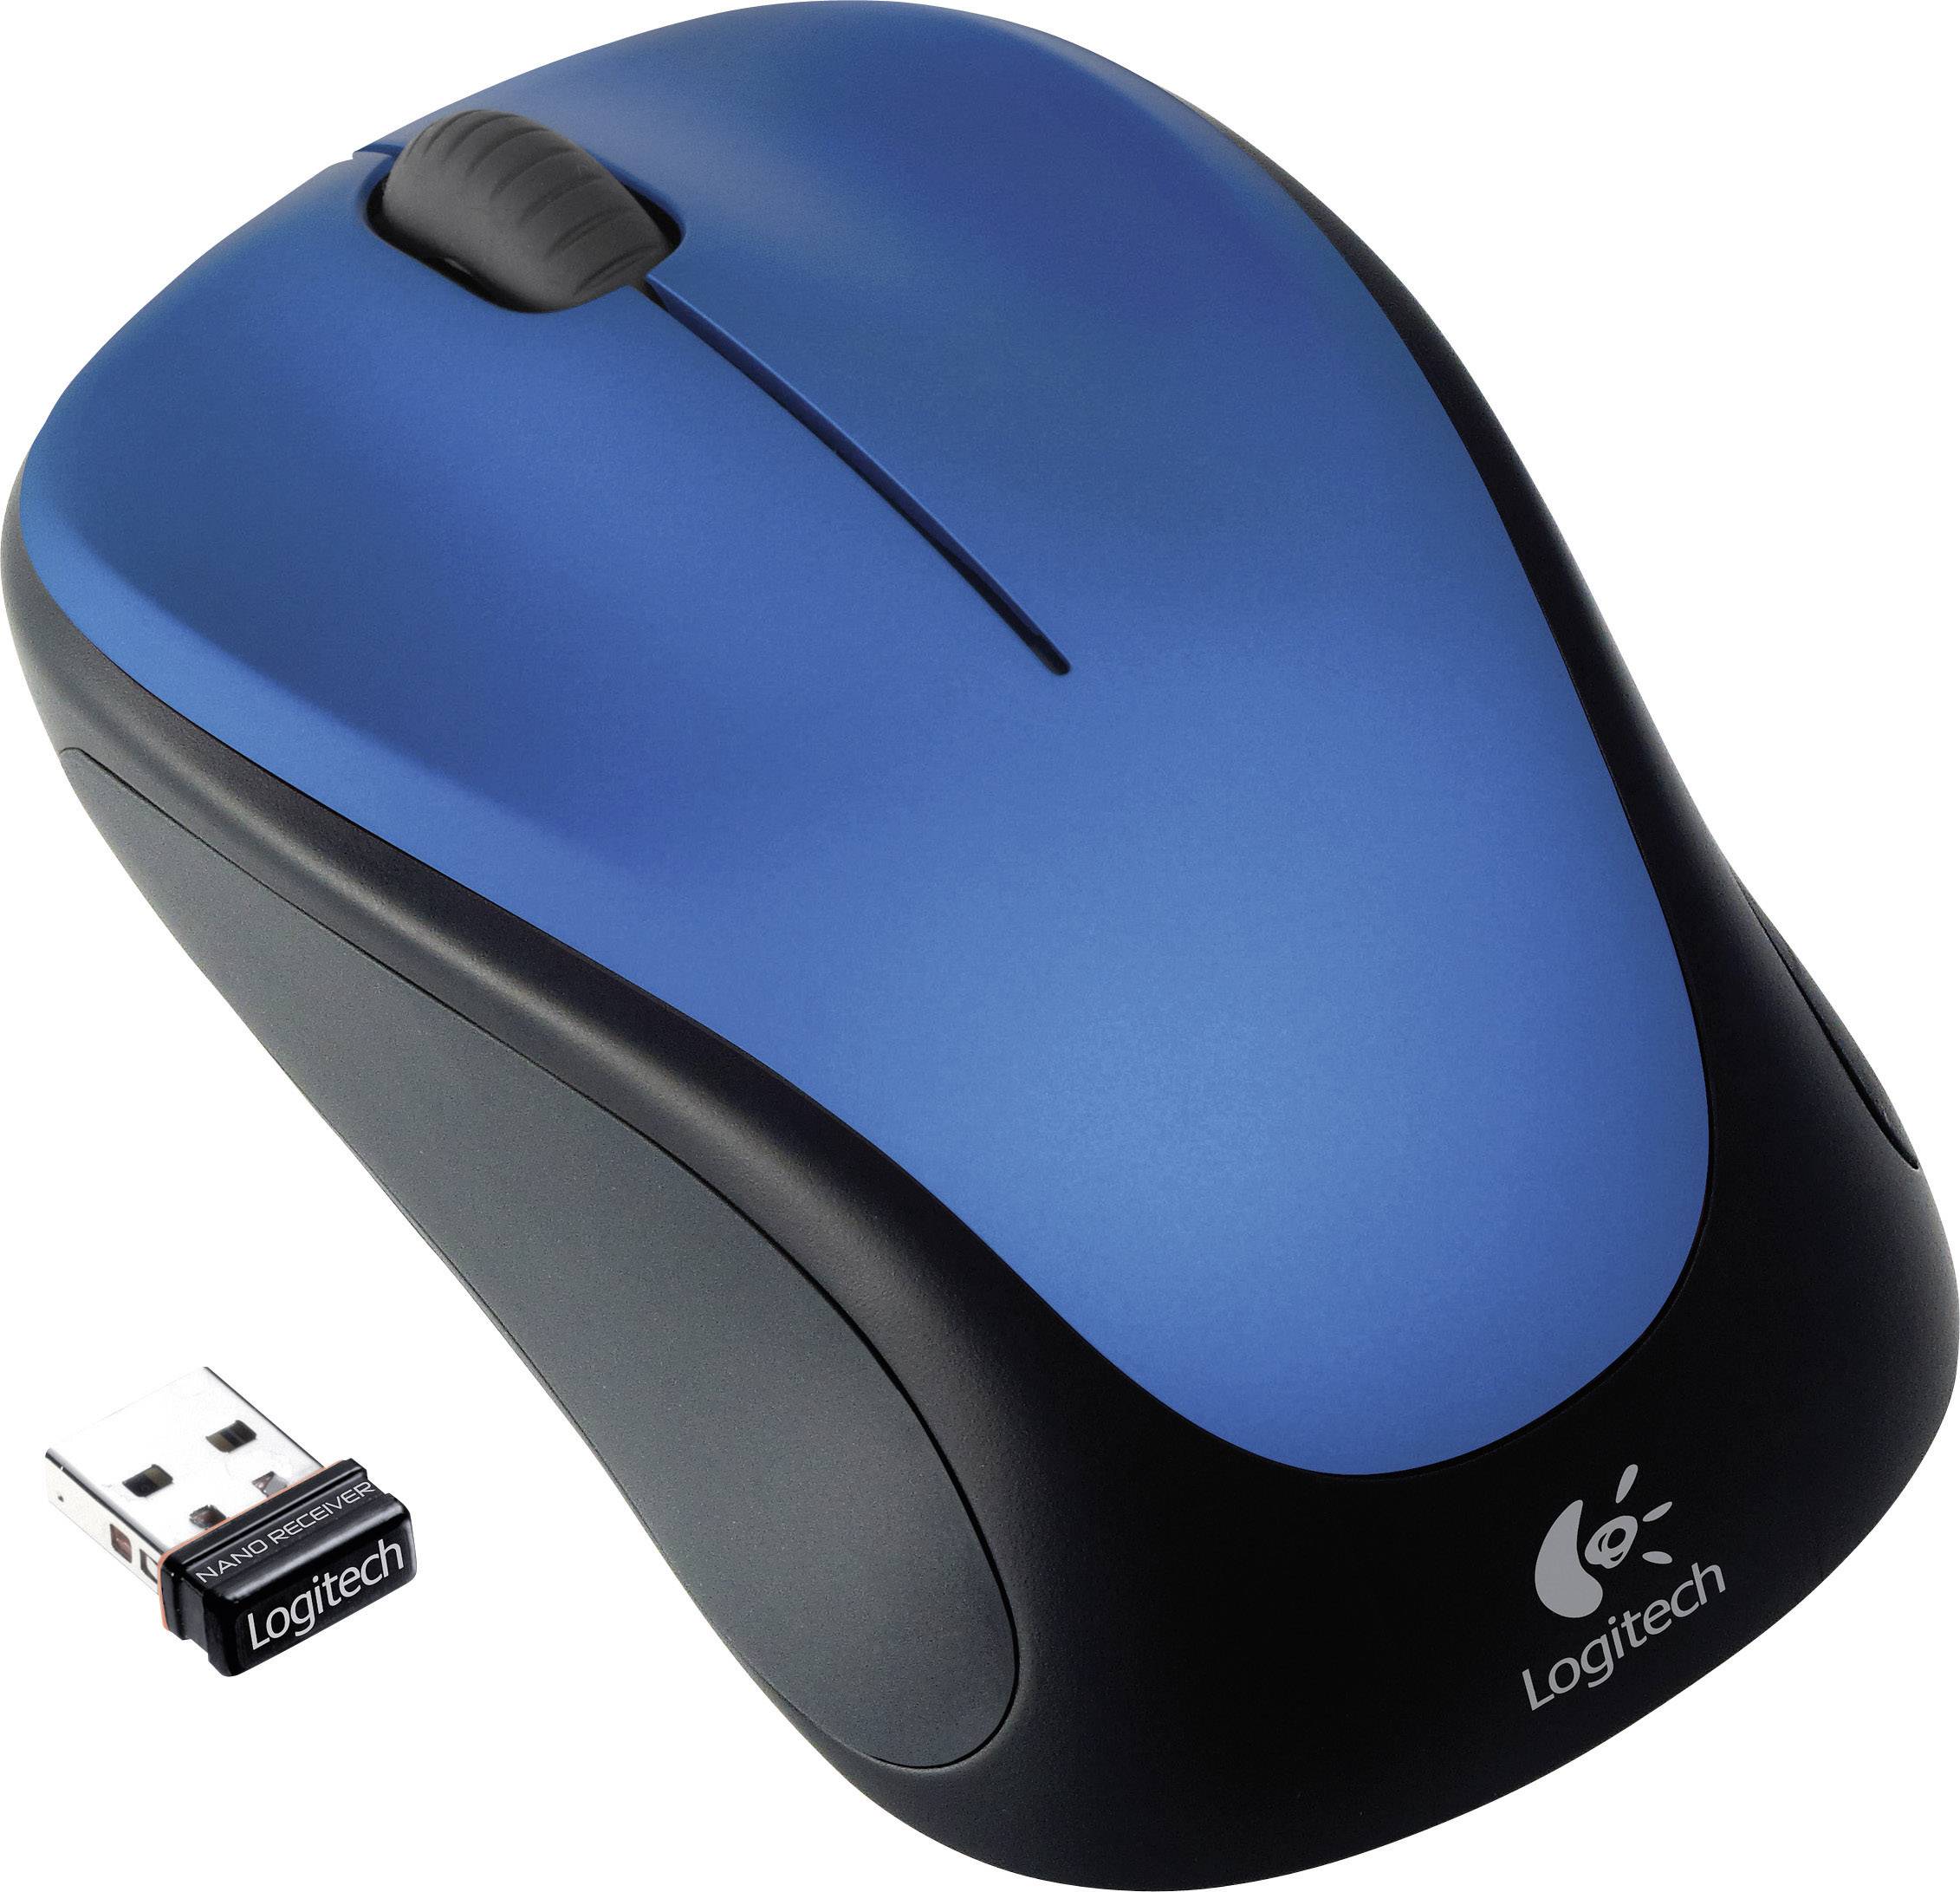 Funkmaus Wireless Mouse M235 | Conrad.com